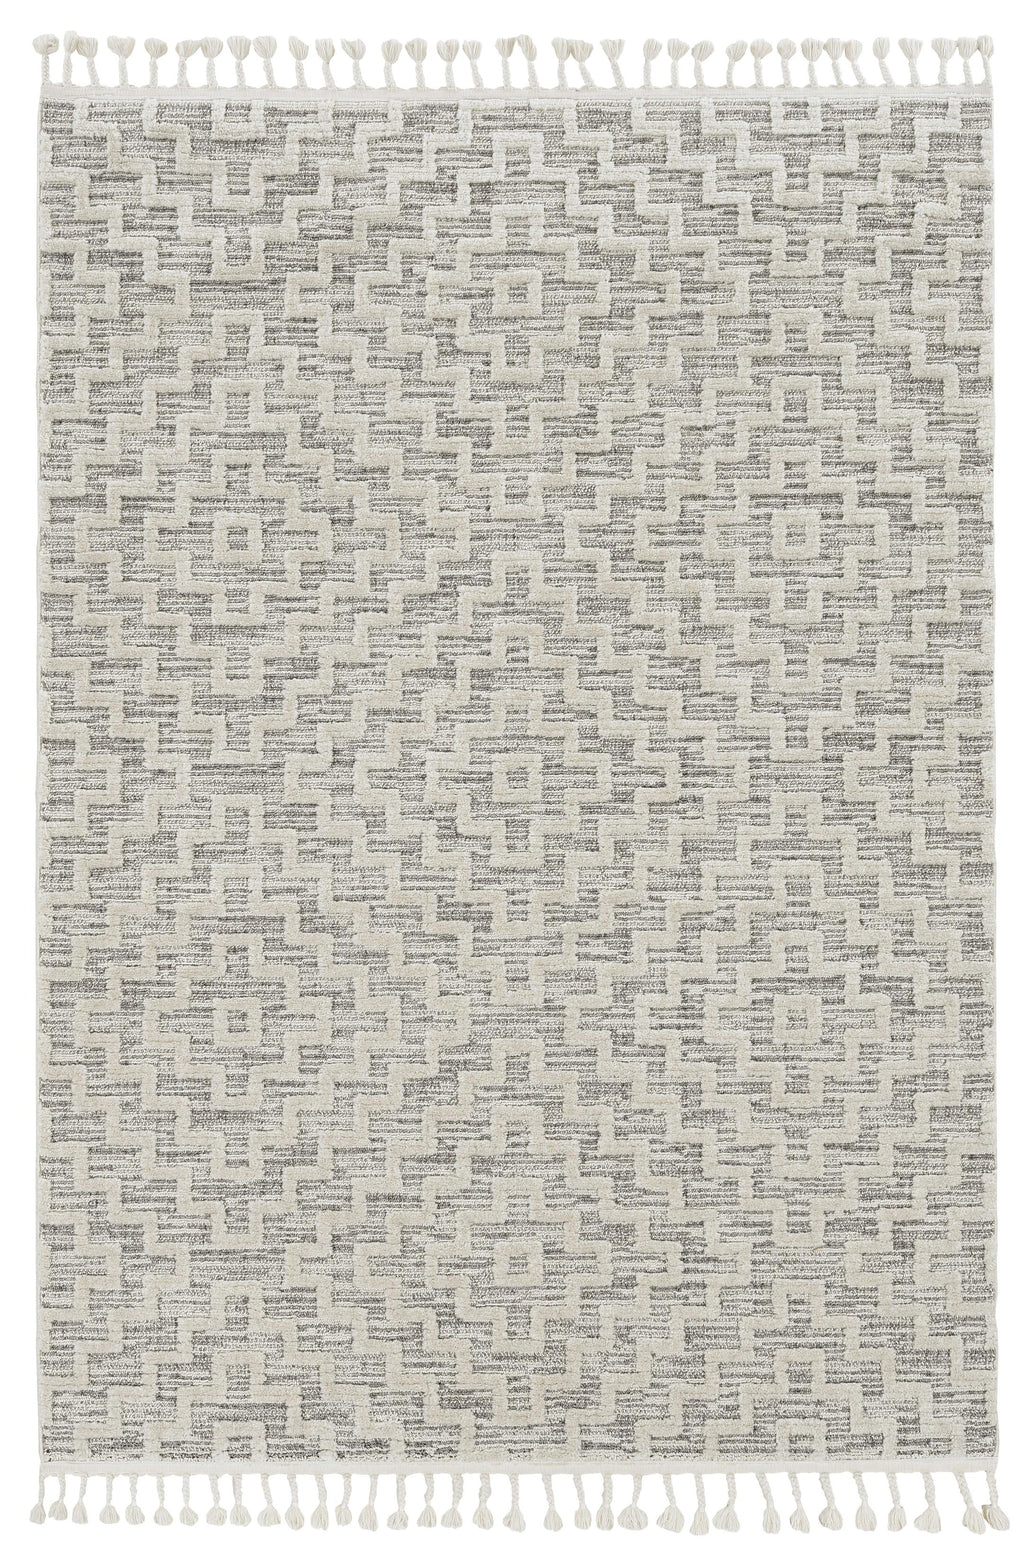 12'x15' Ivory Grey Machine Woven Diamond Pattern With Fringe Indoor Area Rug